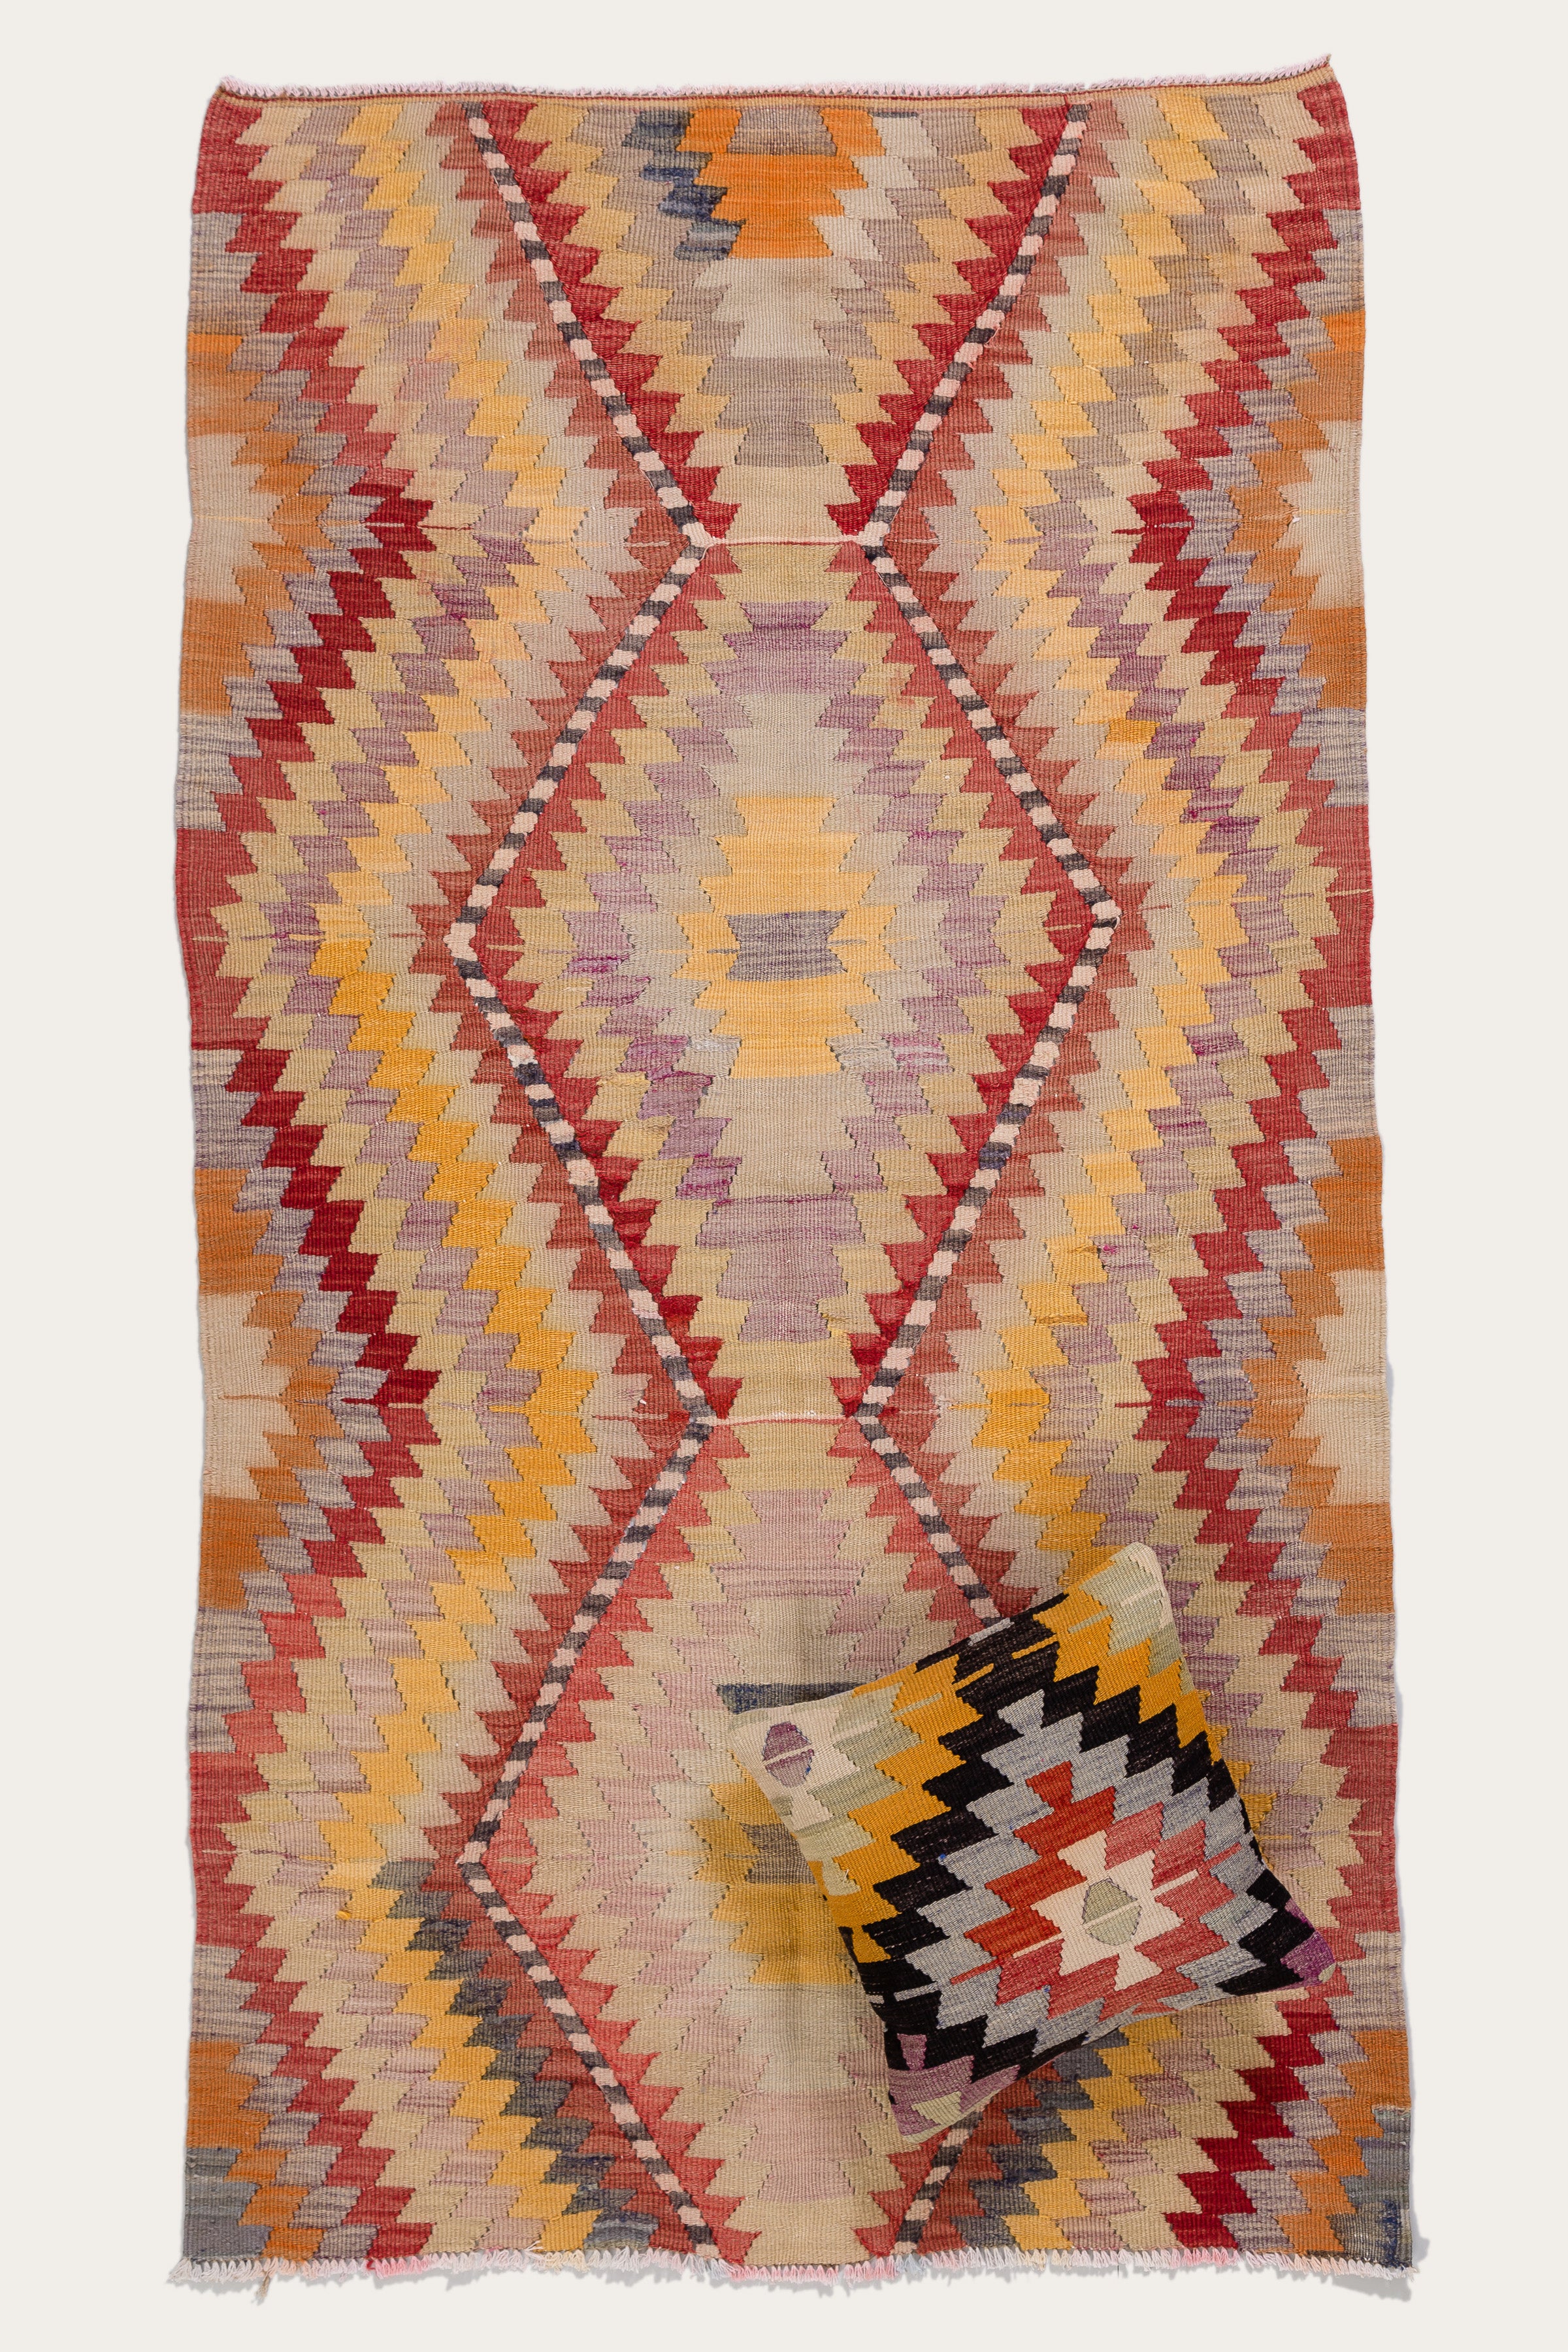 Vintage Kilim 1960s, Tavas/Anatolia (187x183cm) - Wild Heart Free Soul